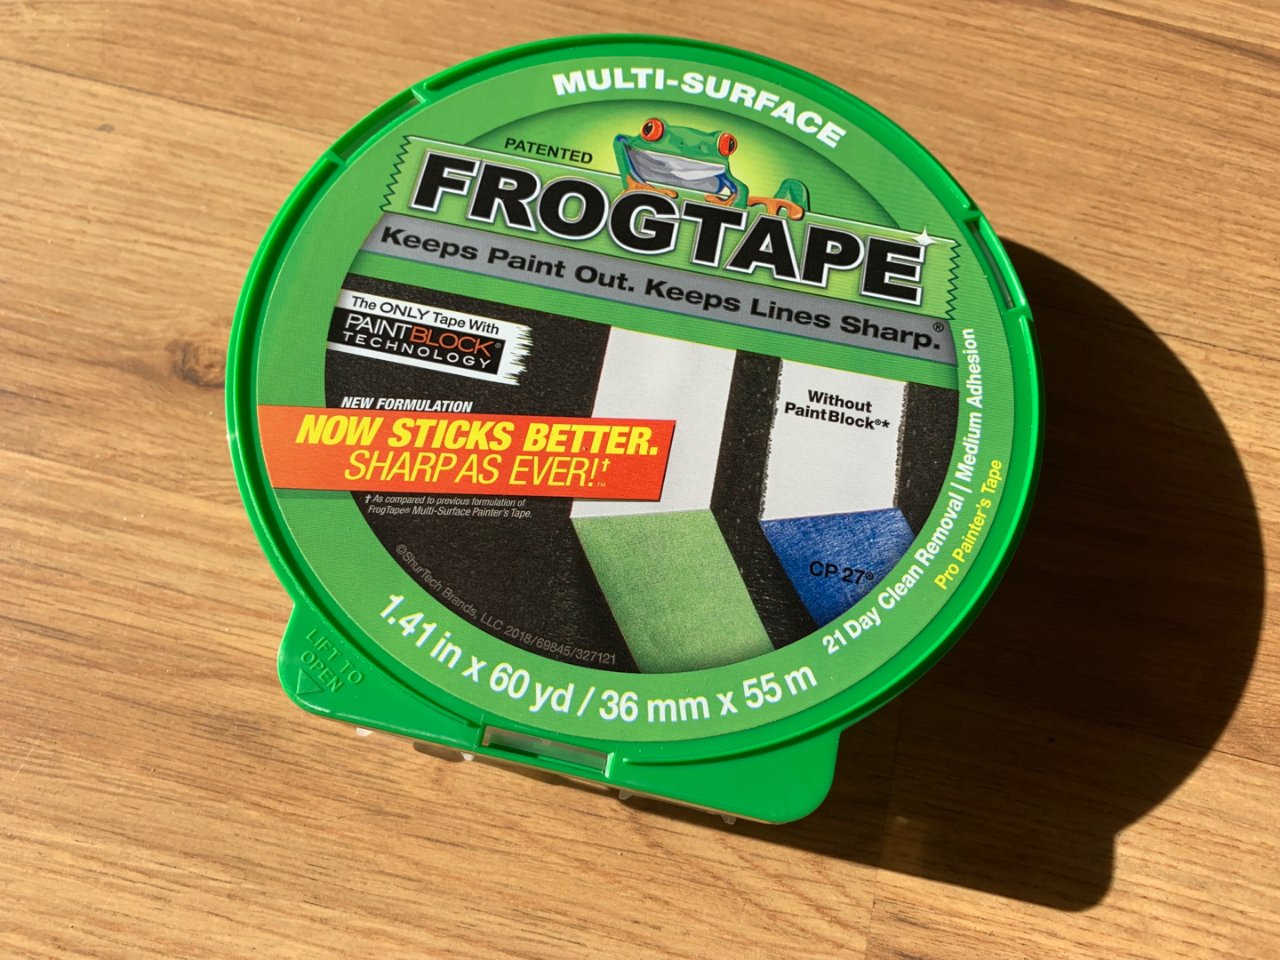 Frog tape,Homedepot,一人居必备,小工具帮大忙